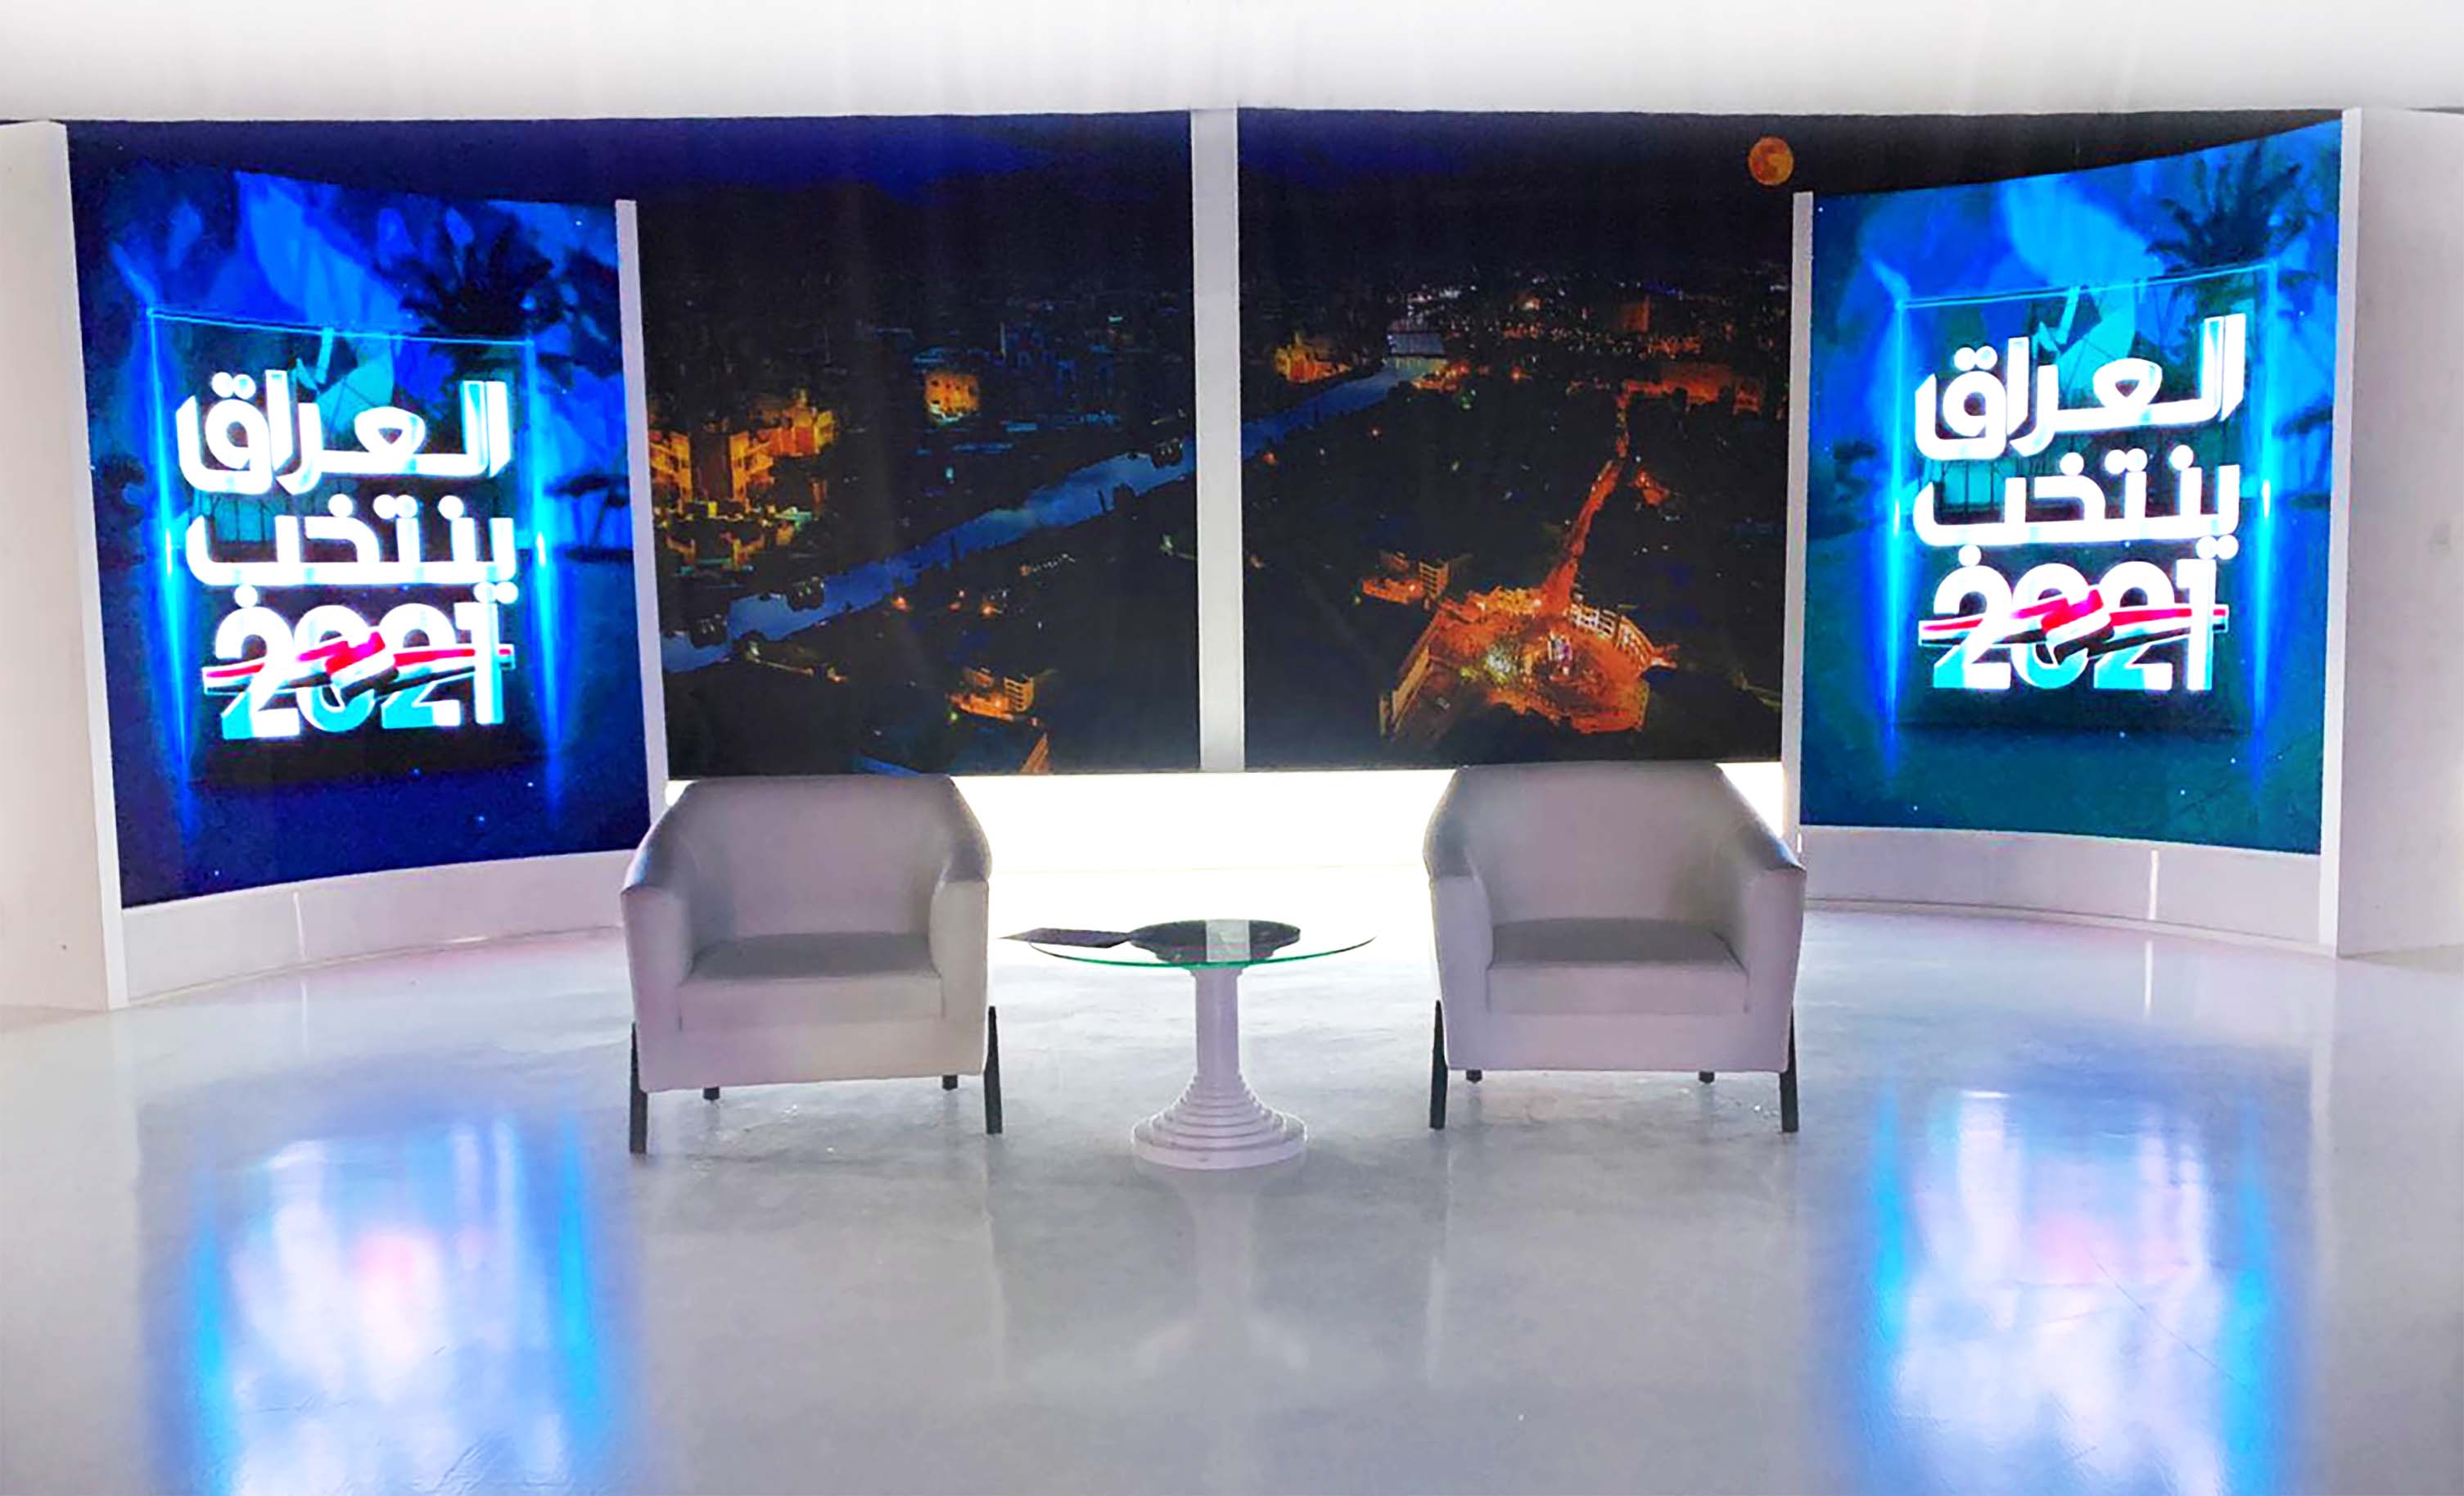 TV Studio AlSharqiya Chooses INFiLED and WAVE Media for Ultra-Thin, Curved LED Display Setup in Iraq